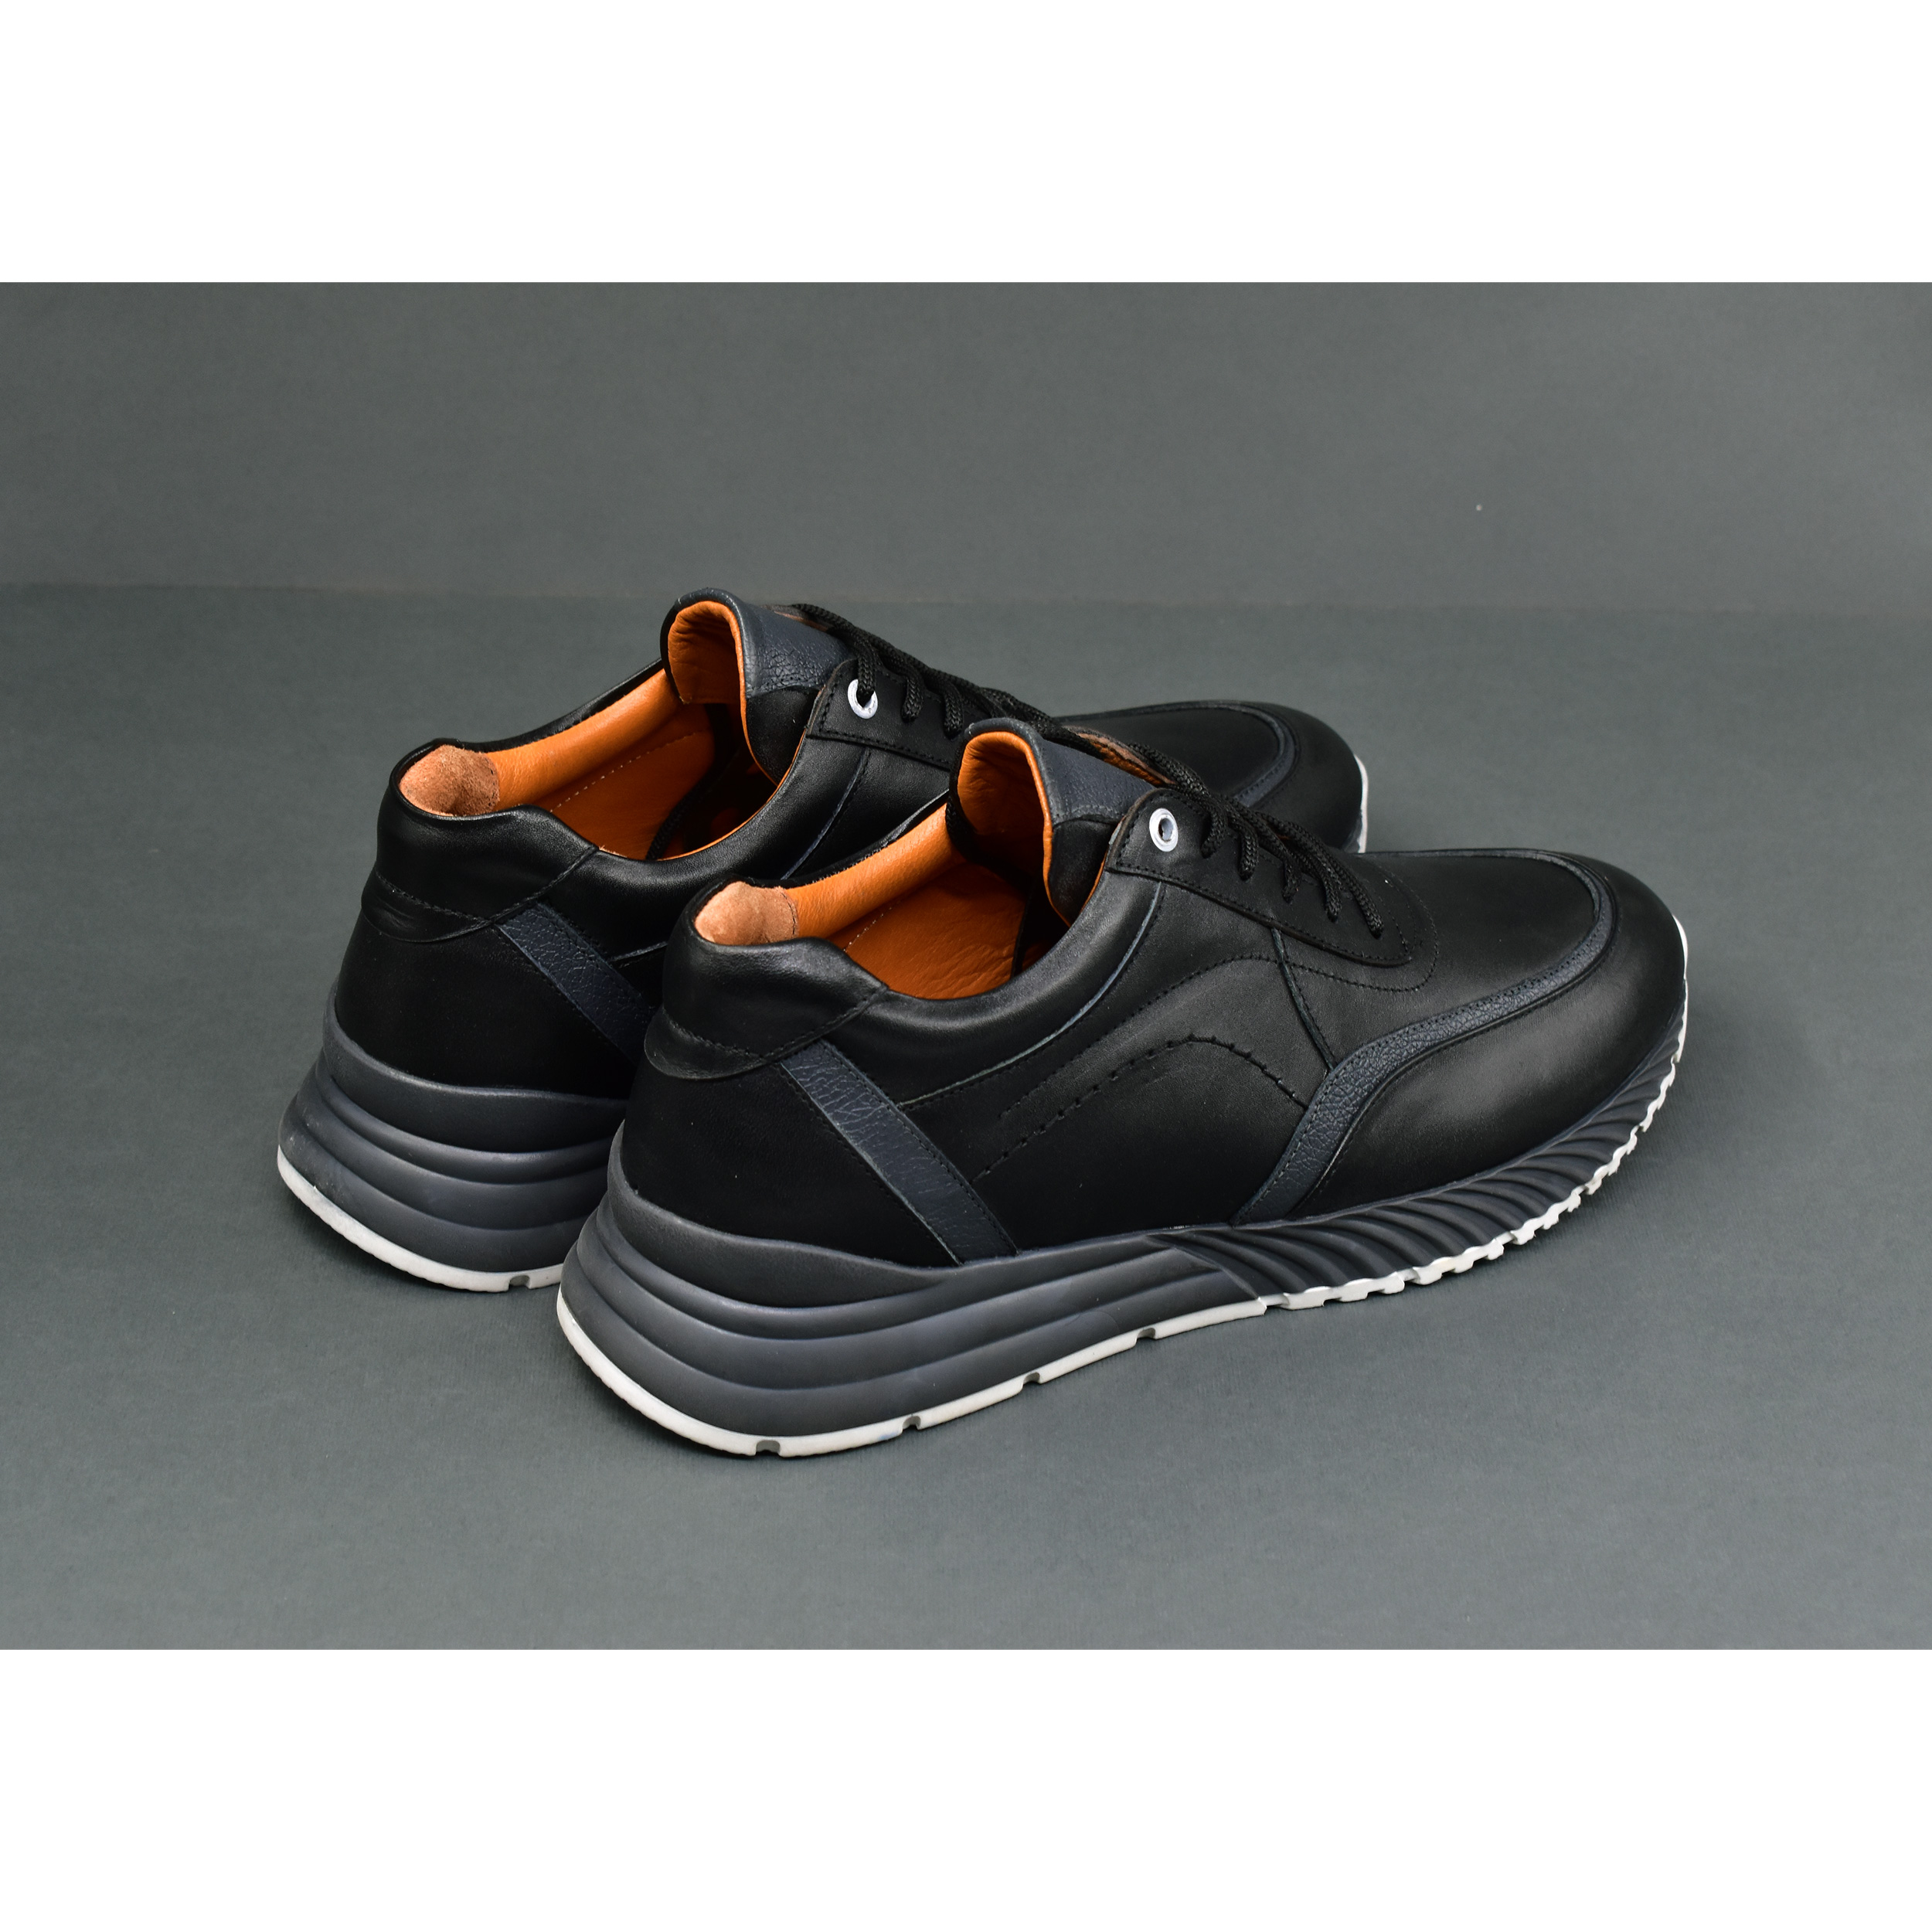 کفش روزمره مردانه پاما مدل ME-631 کد G1808 -  - 4